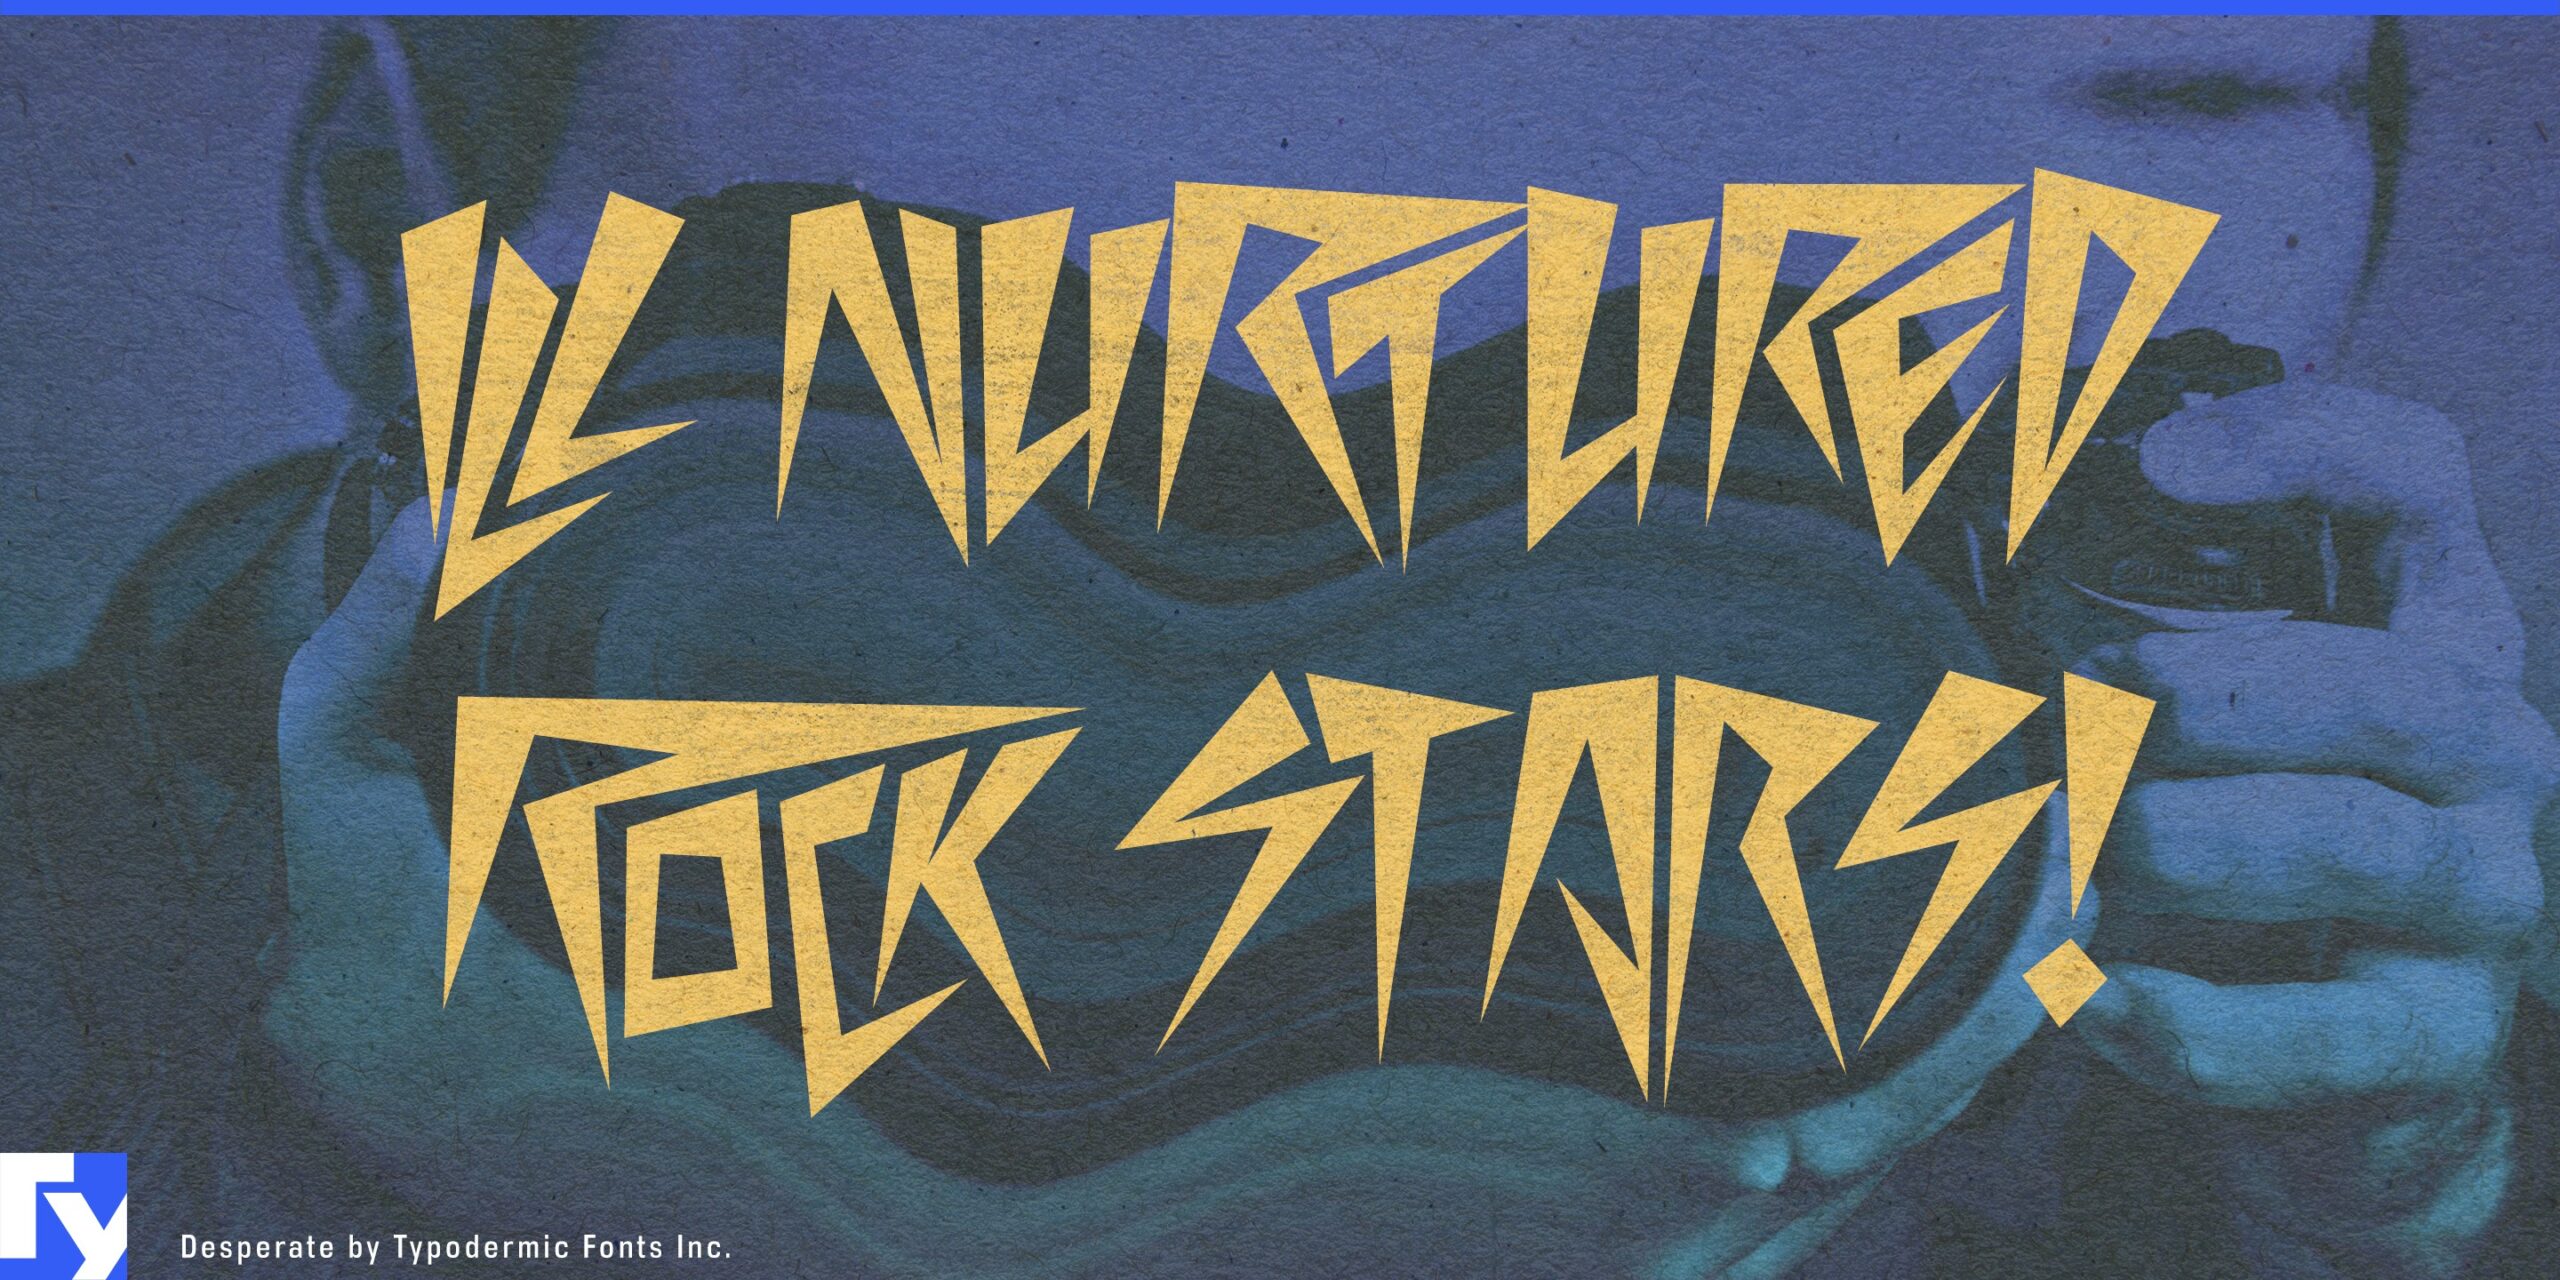 Punk Rock Power: Let Desperate Typeface Amplify Your Message